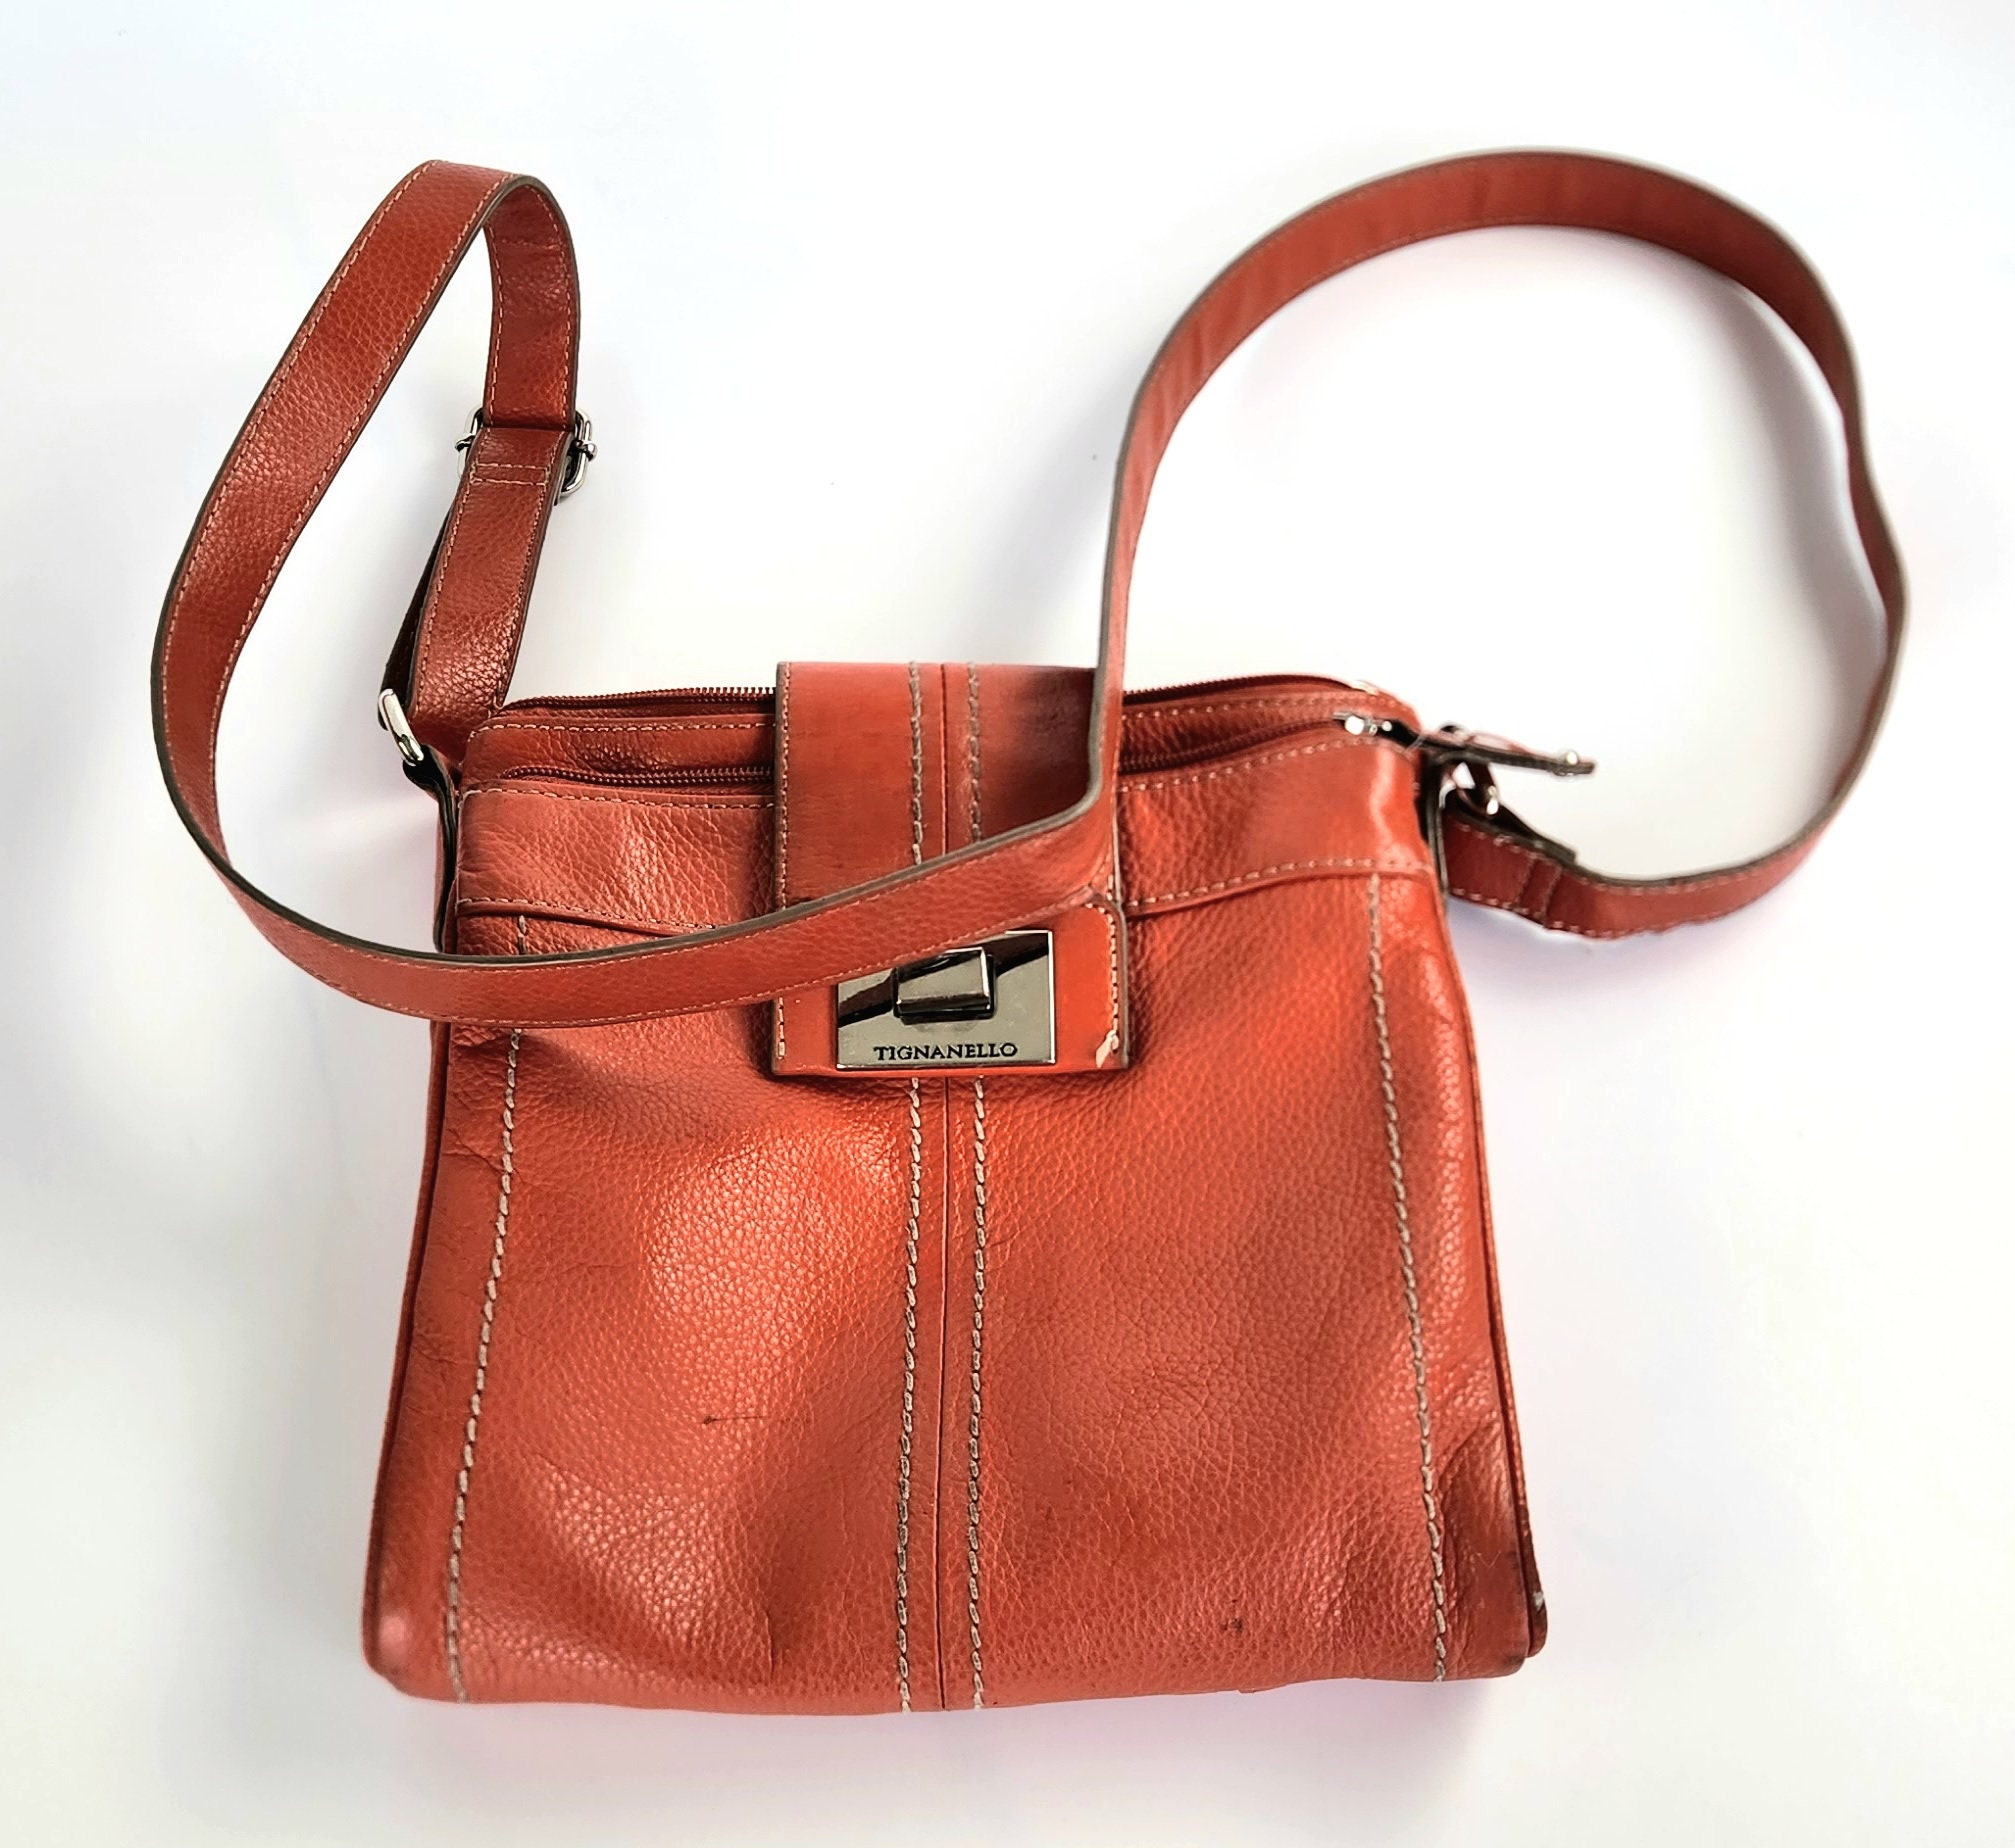 Pair Of Leather Tignanello Handbags